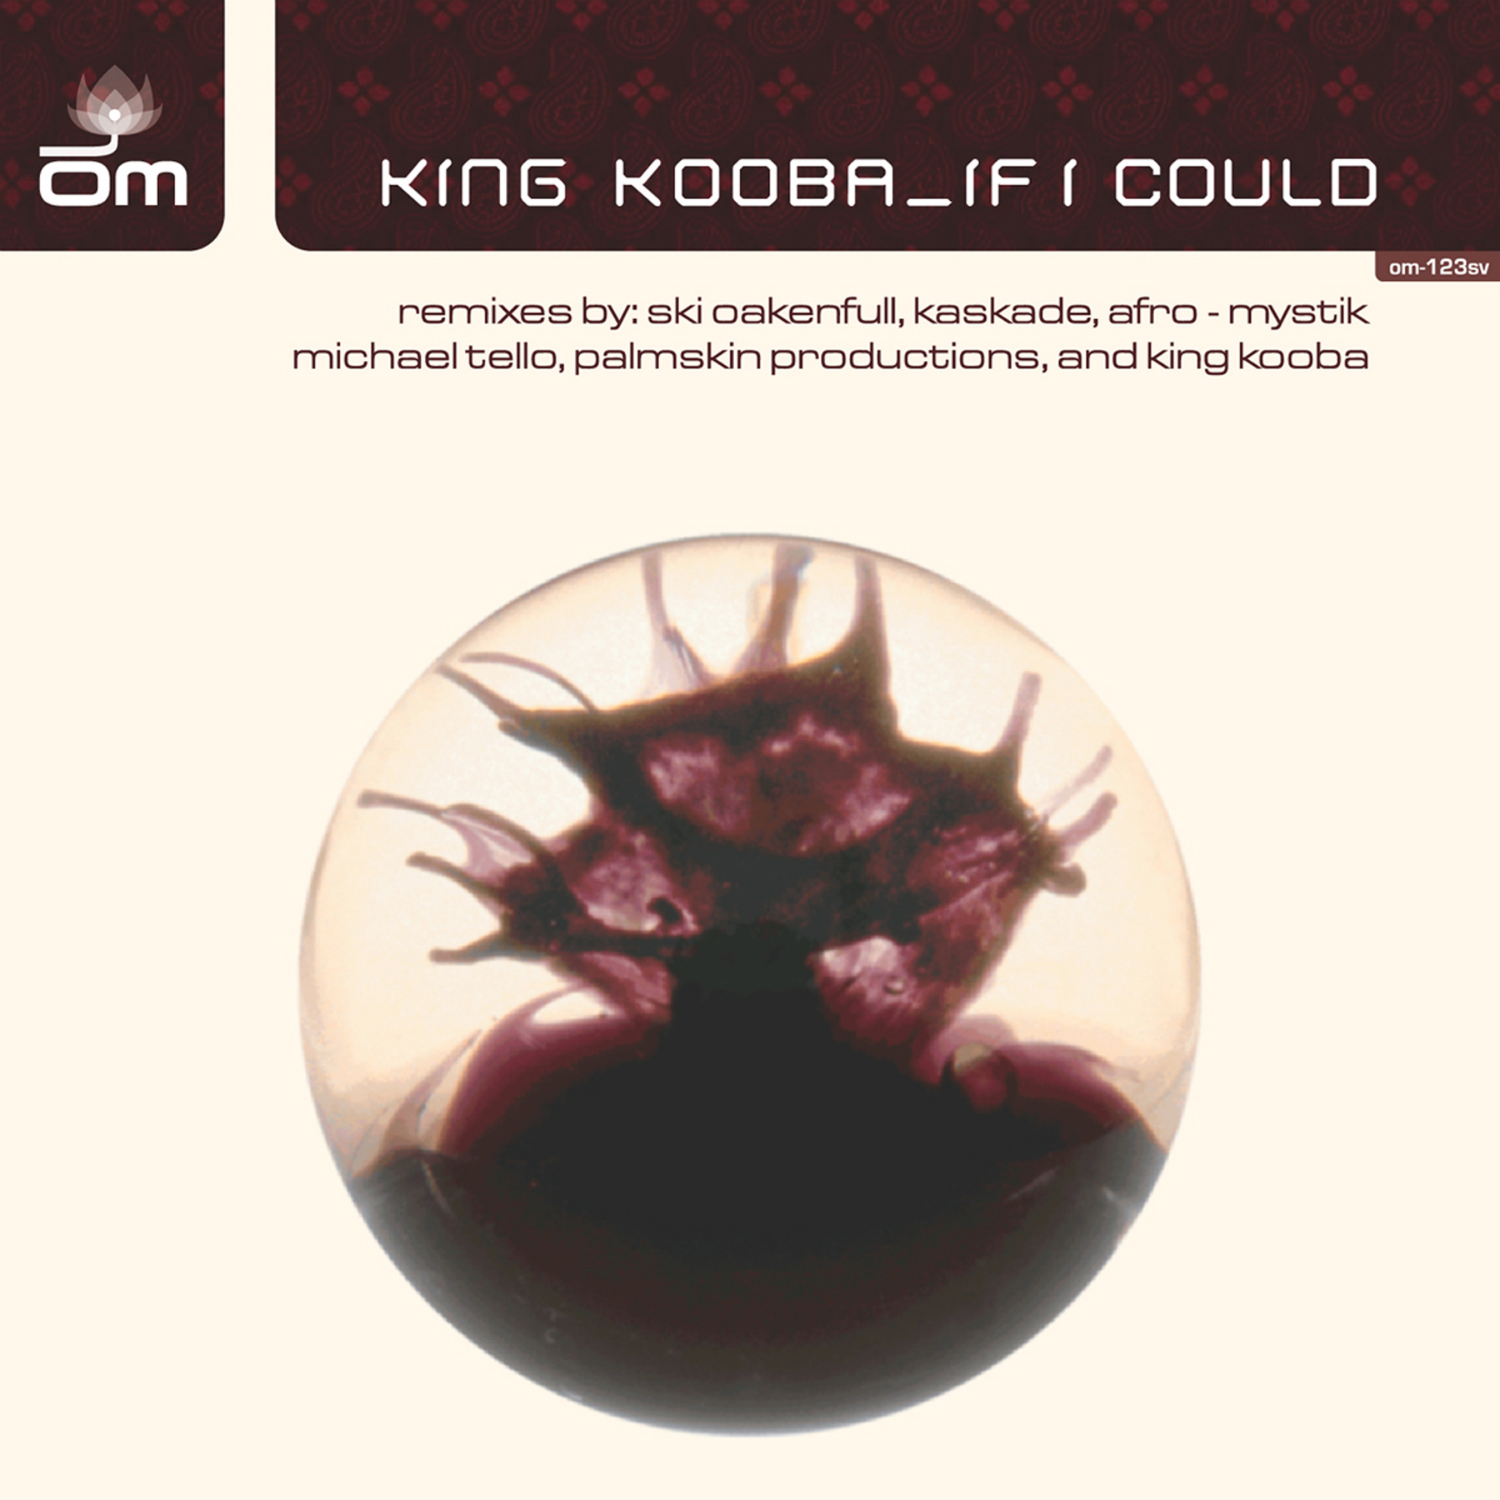 King Kooba - The Future